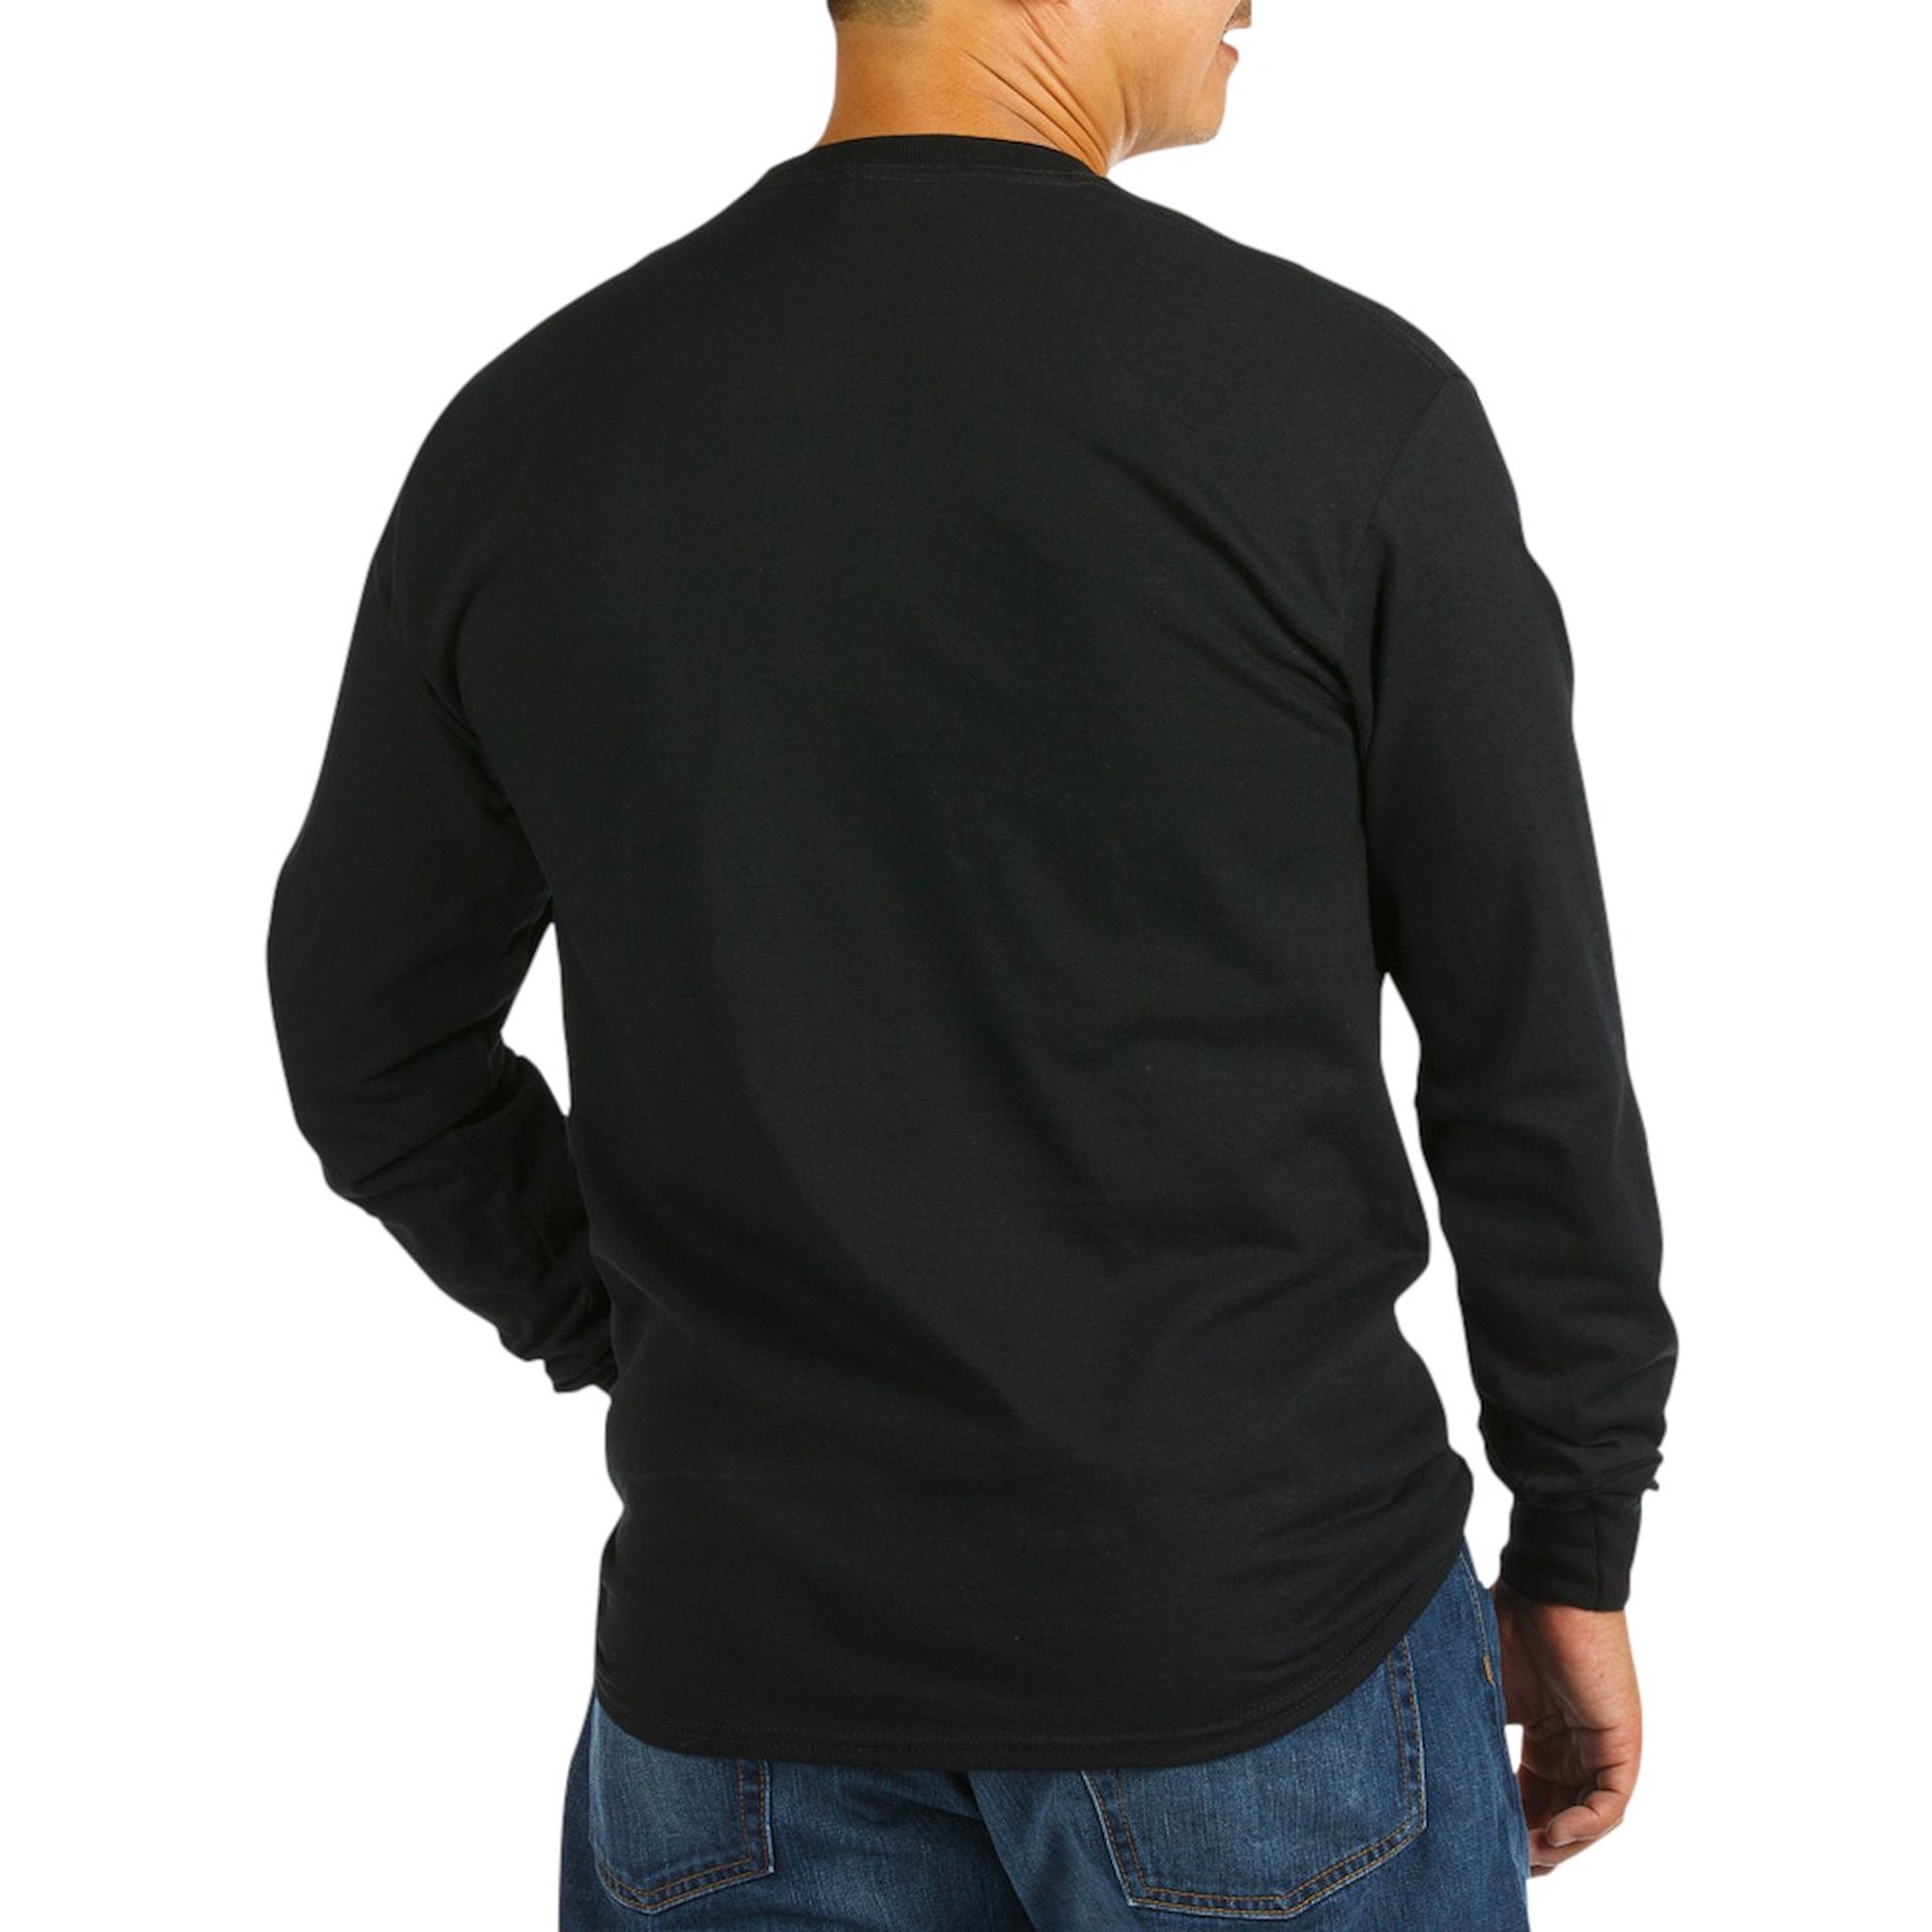 CafePress - San Diego Long Sleeve Dark T Shirt - Long Sleeve Dark T-Shirt - image 2 of 4